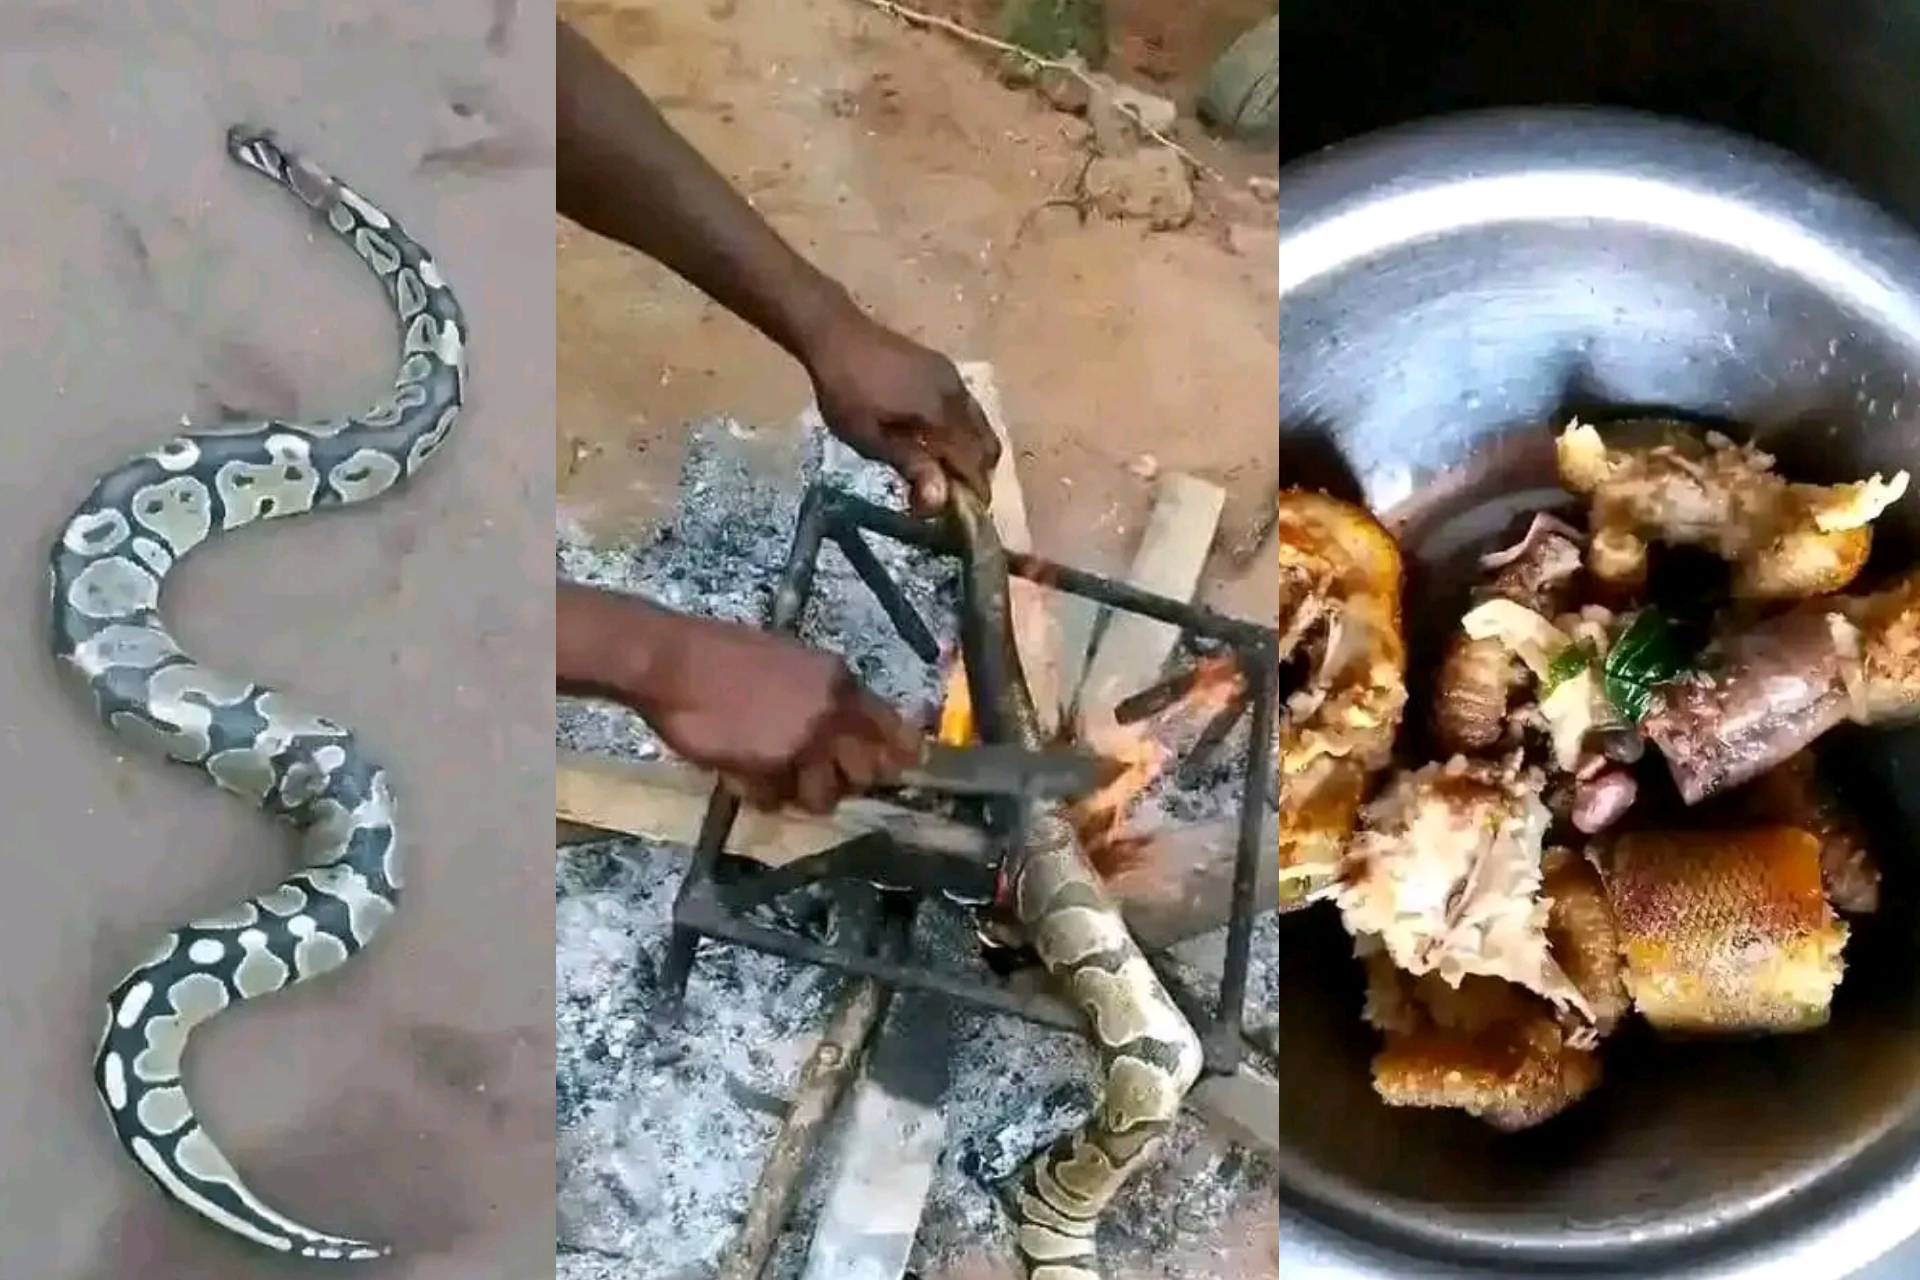 Cooking snake in Nigeria